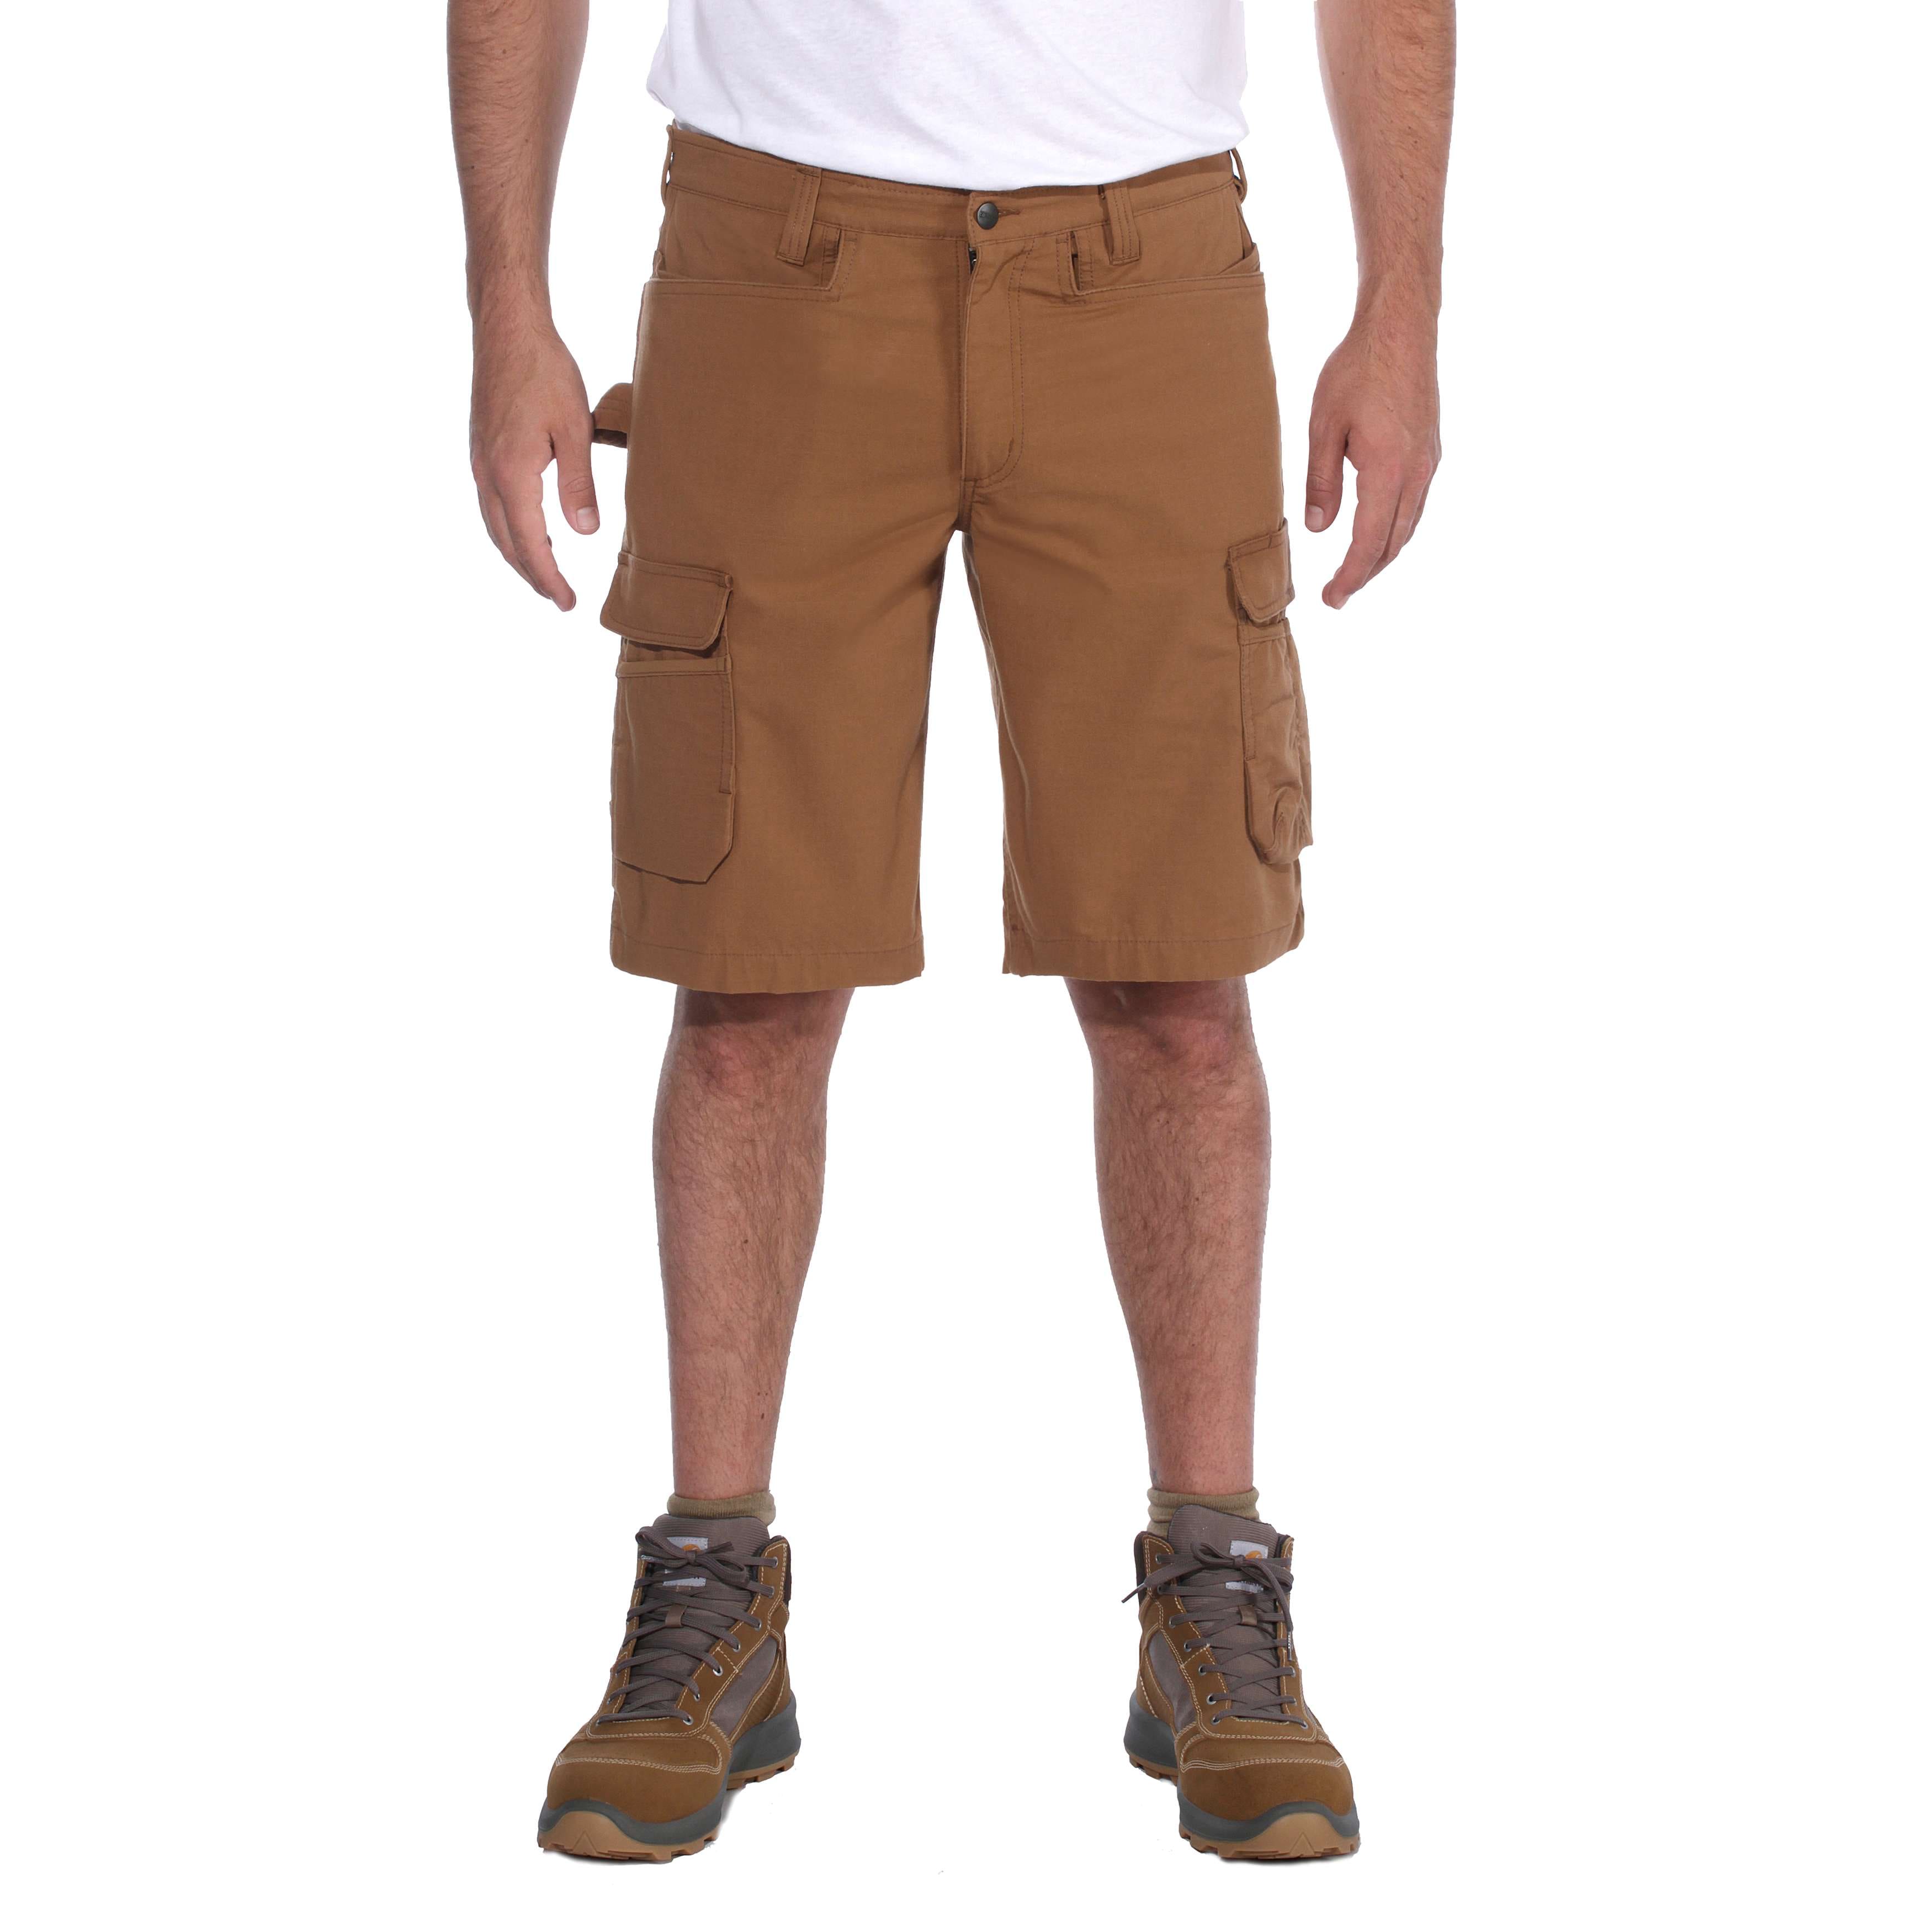 Carhartt short EMEA mp ripstop Pirate/pantalones cortos hombres// pantalones de trabajo 